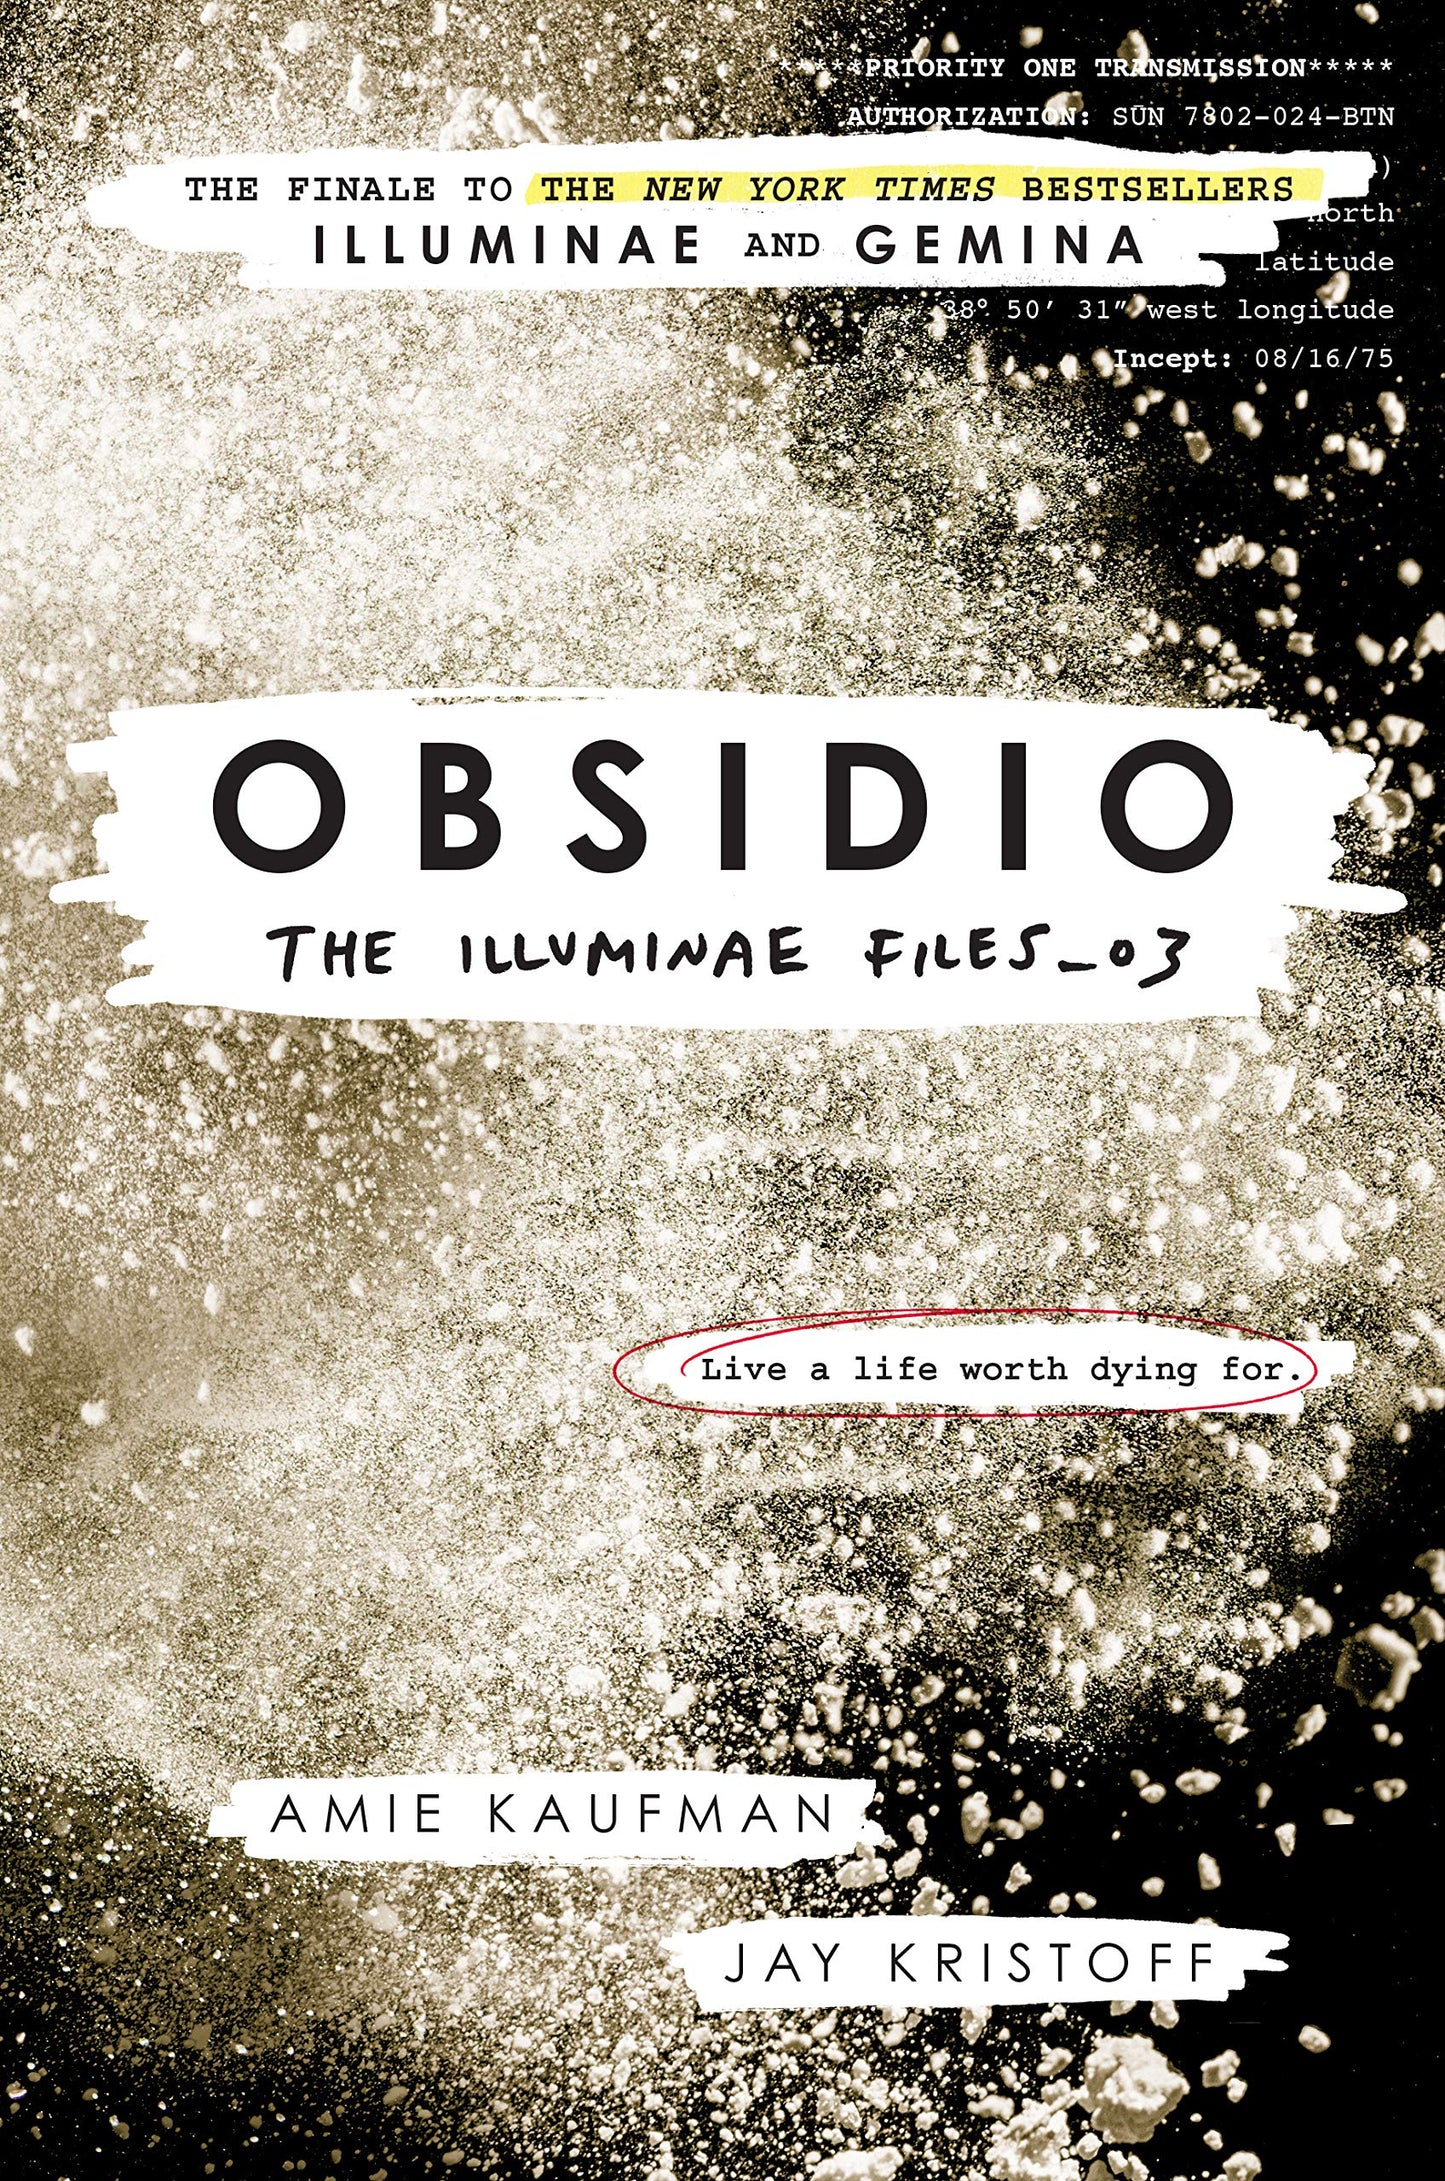 Obsidio (The Illuminae Files 3)